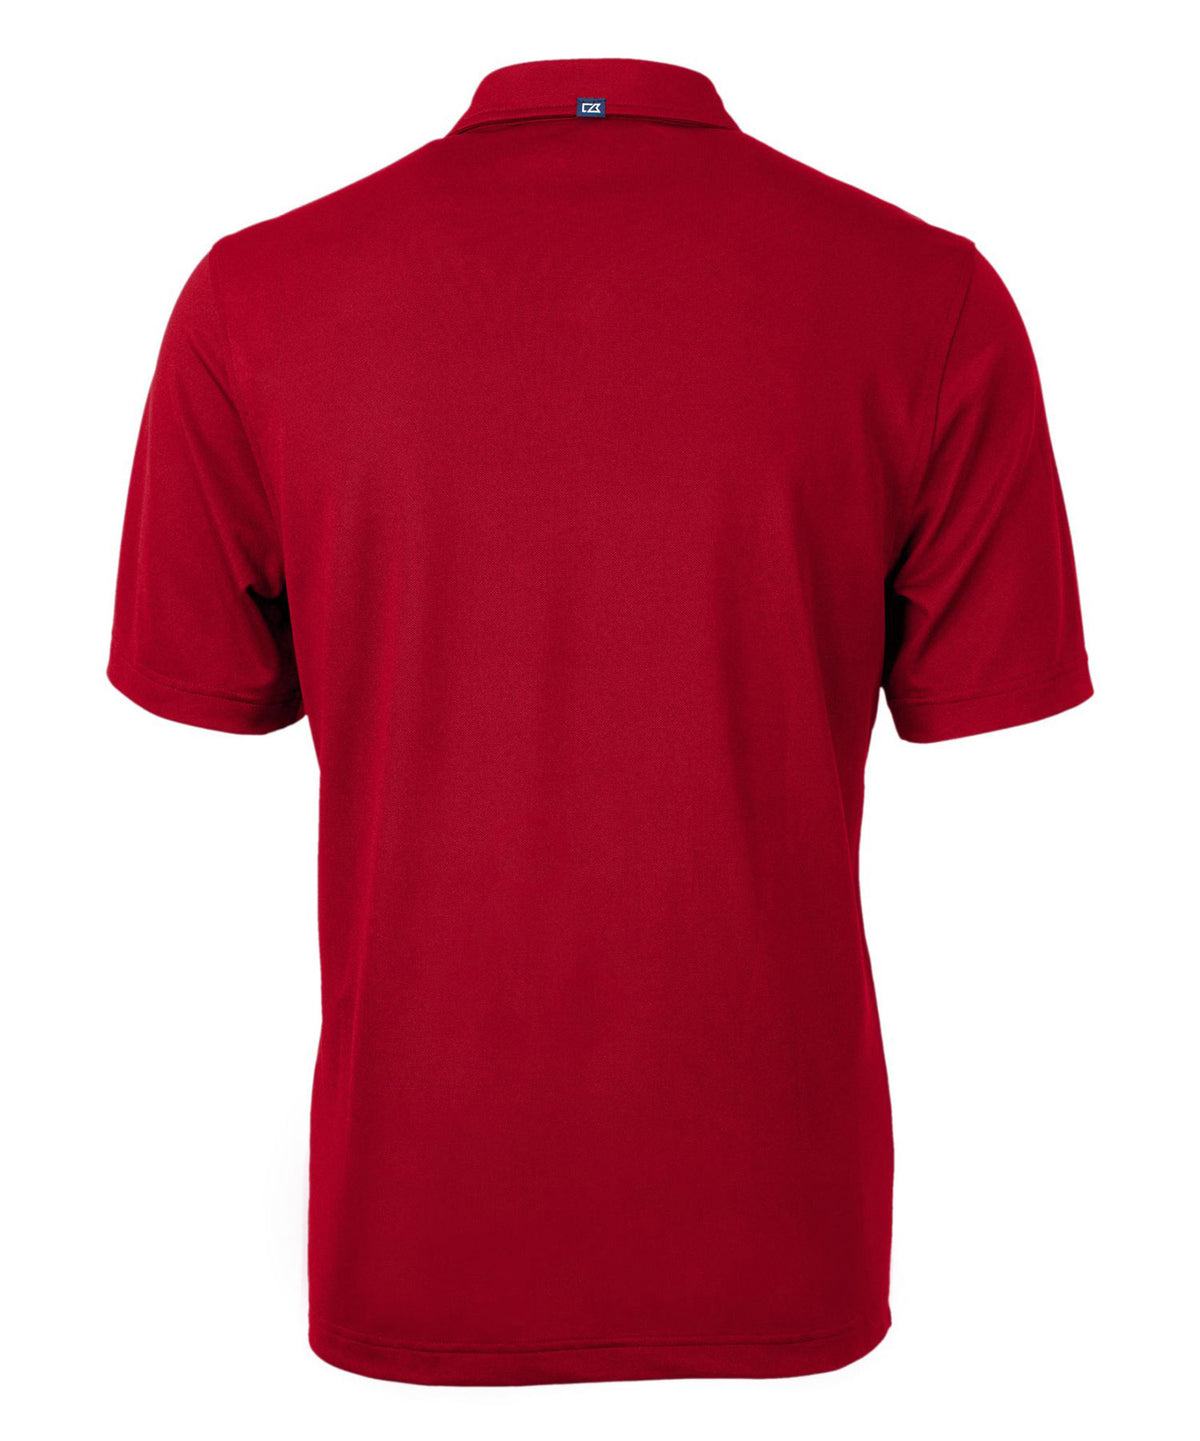 Cutter & Buck University of Nebraska Cornhuskers Short Sleeve Polo Knit Shirt, Men's Big & Tall